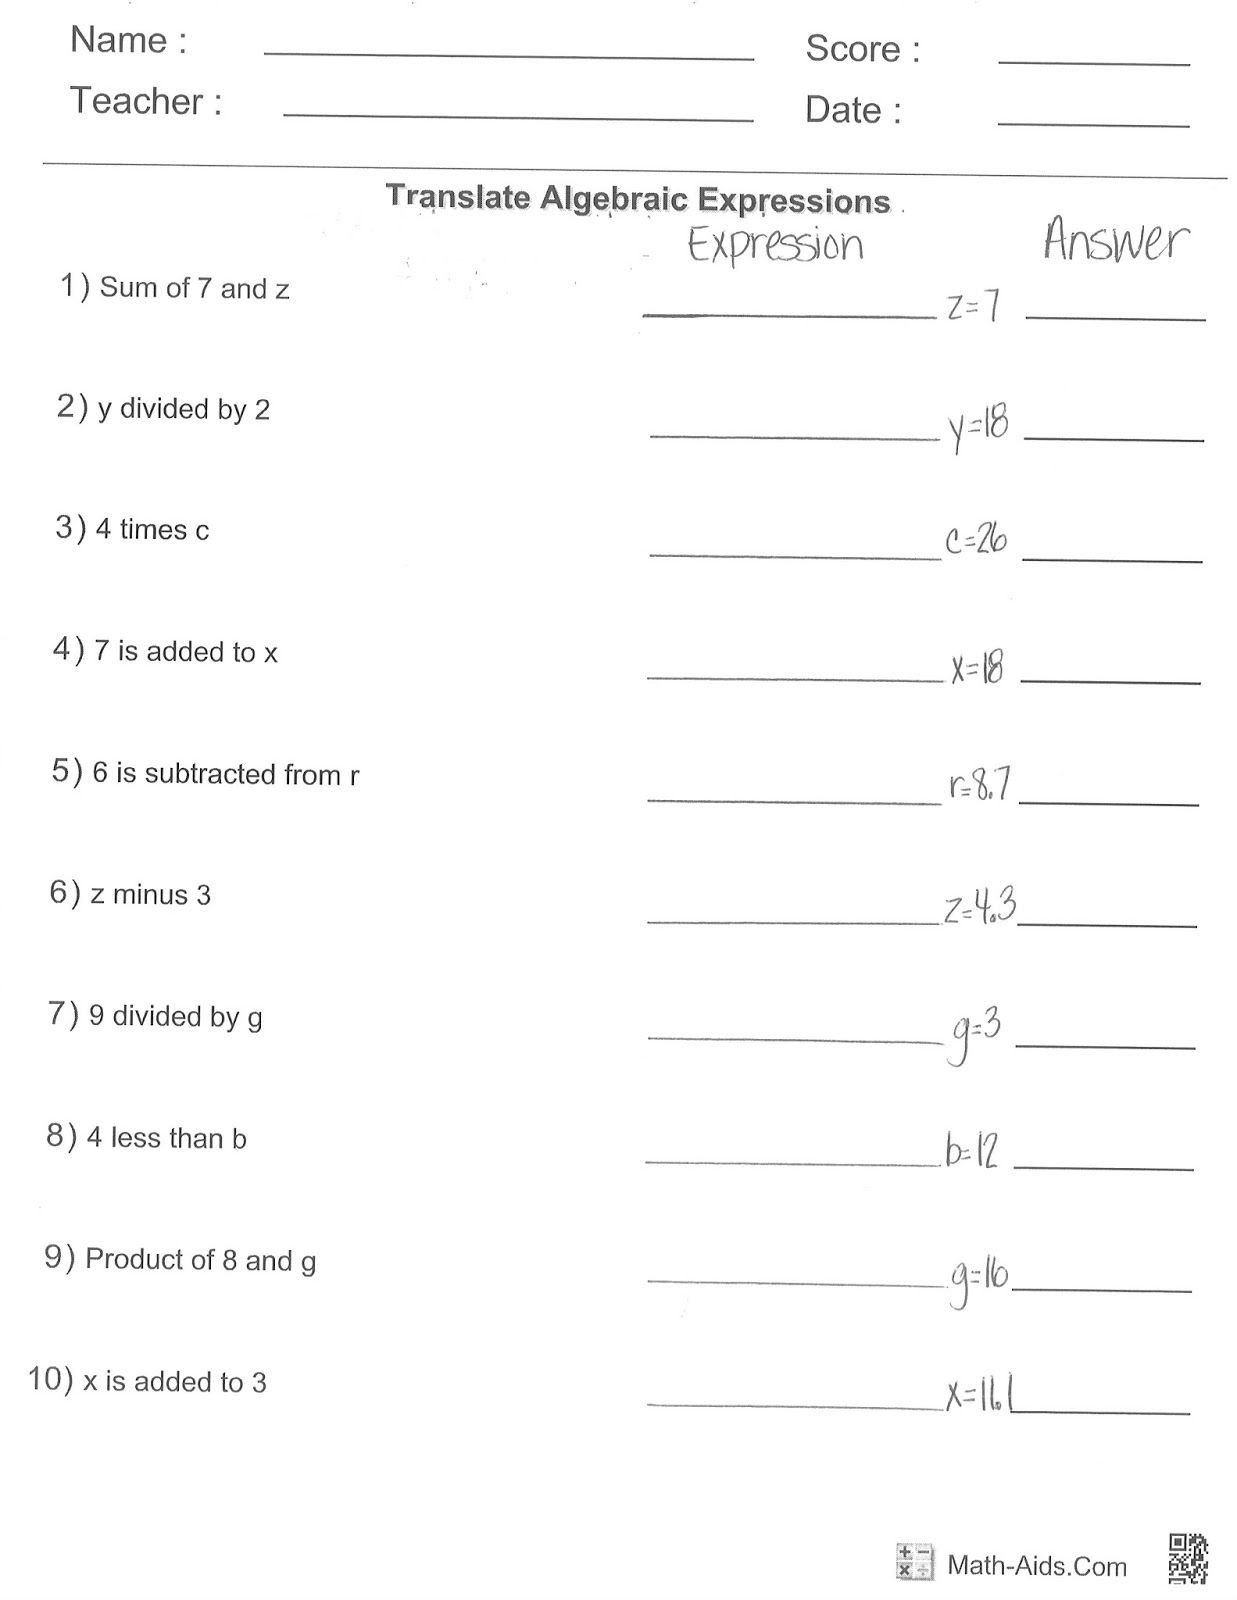 20 Elegant Mythbusters Penny Drop Worksheet Answers Pics  Grahapada Regarding Mythbusters Penny Drop Worksheet Answers